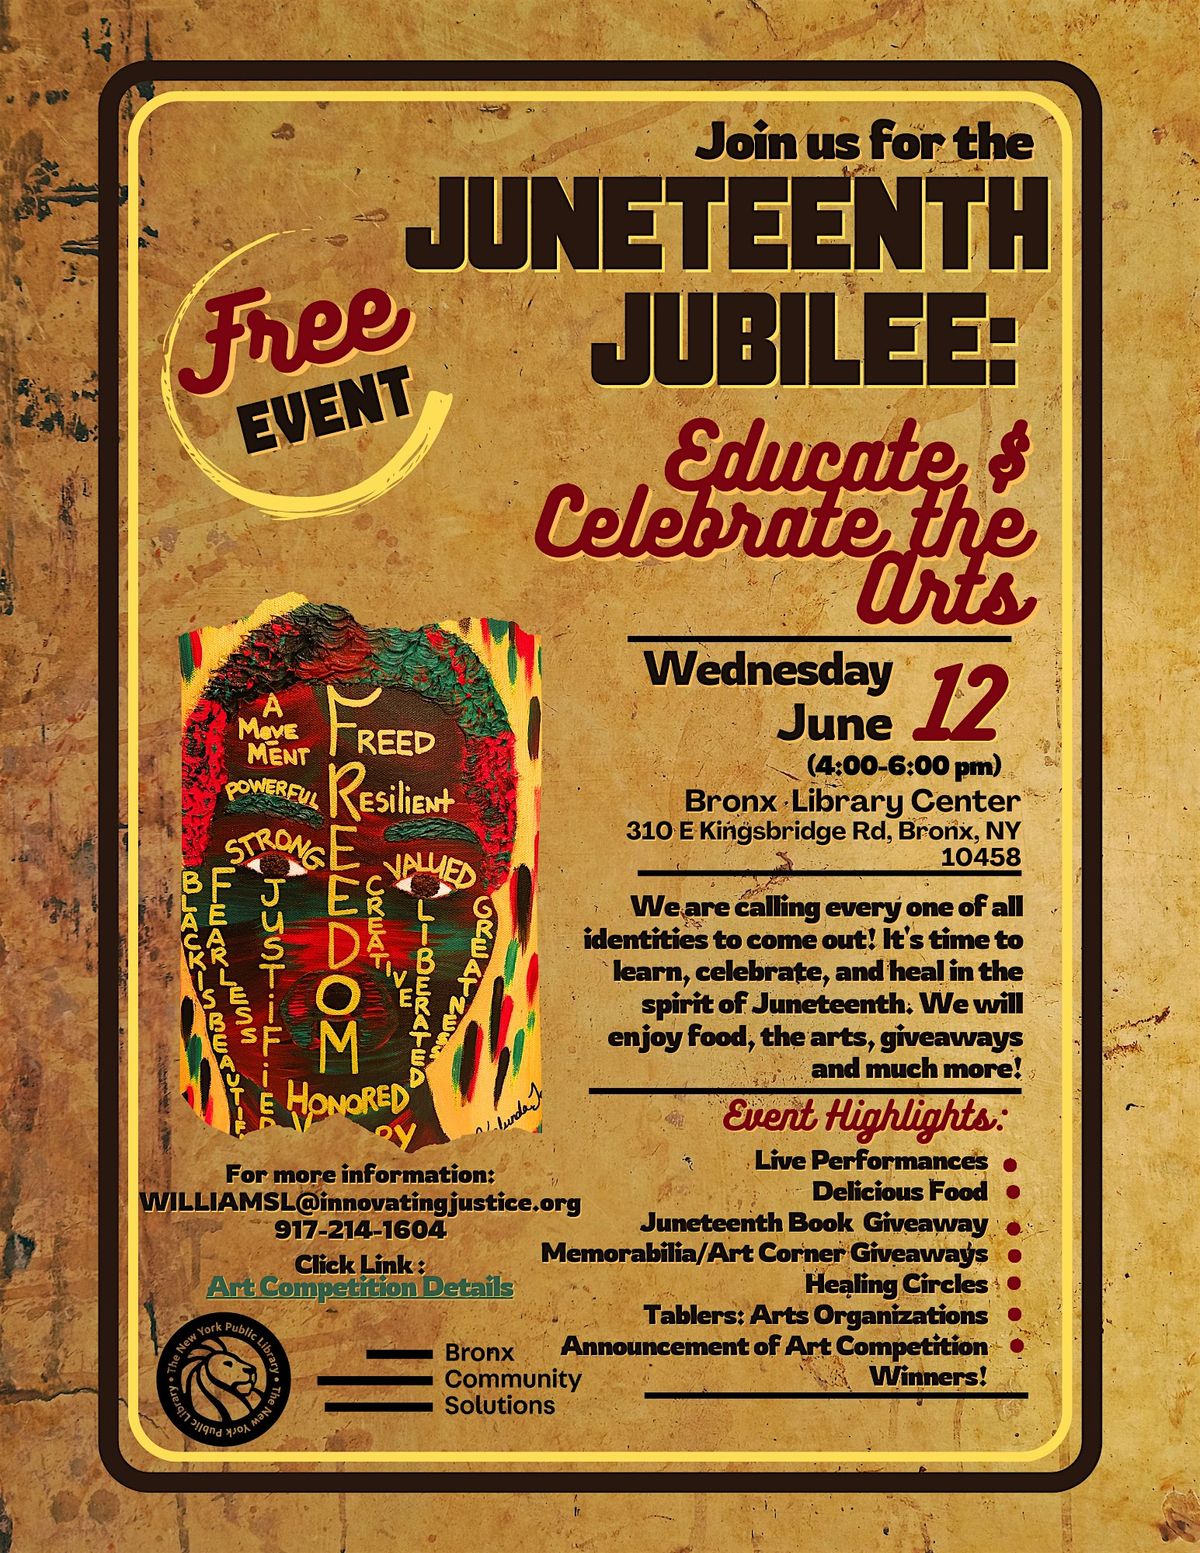 Juneteenth Jubilee: Educate & Celebrate the Arts!